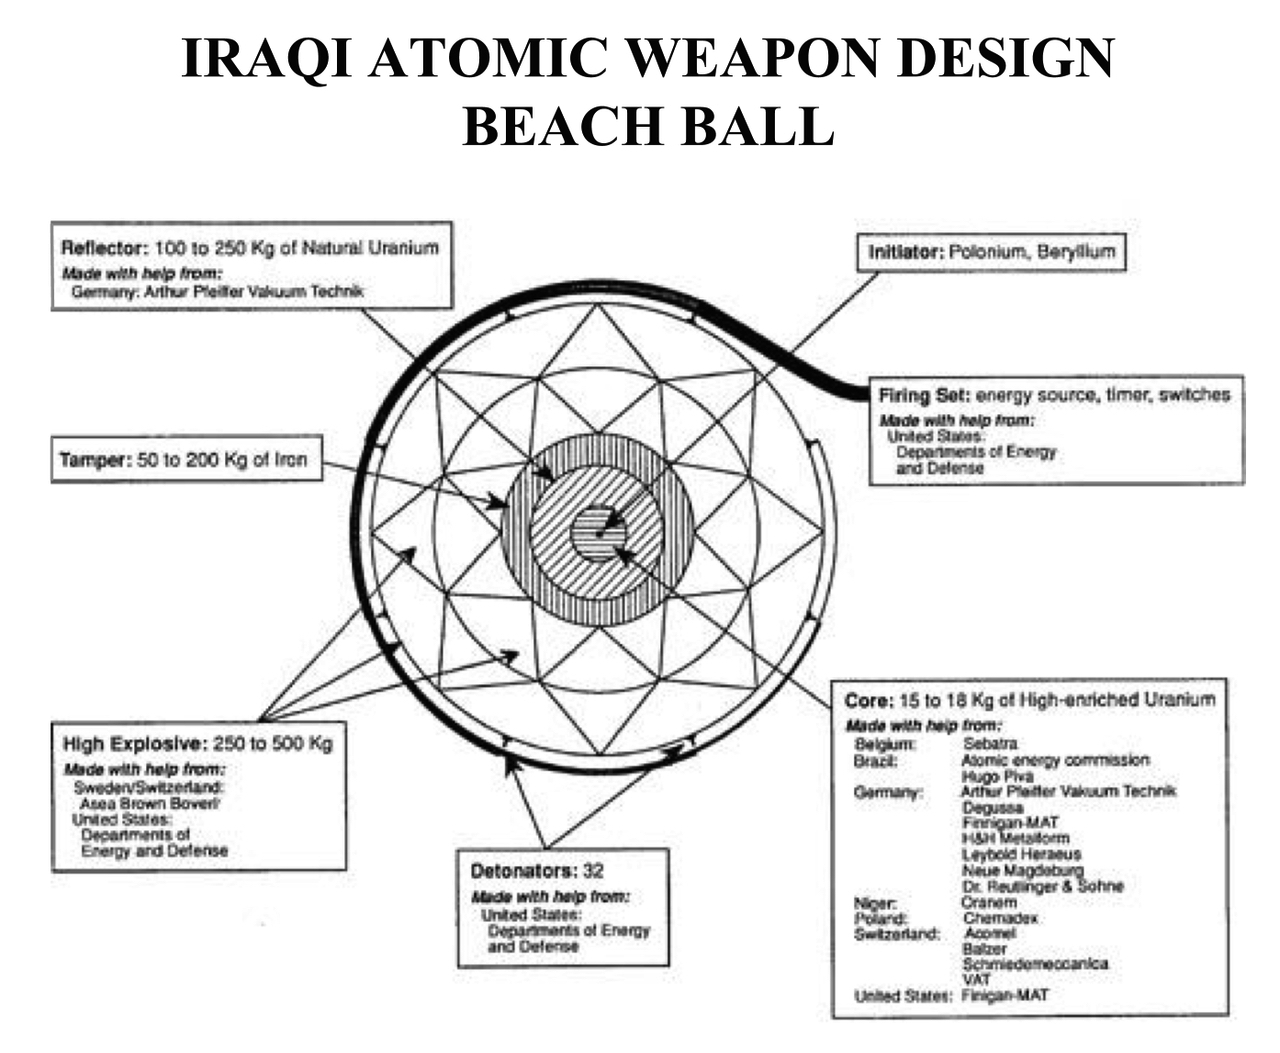 IRAQI ATOMIC WEAPON DESIGN BEACH BALL